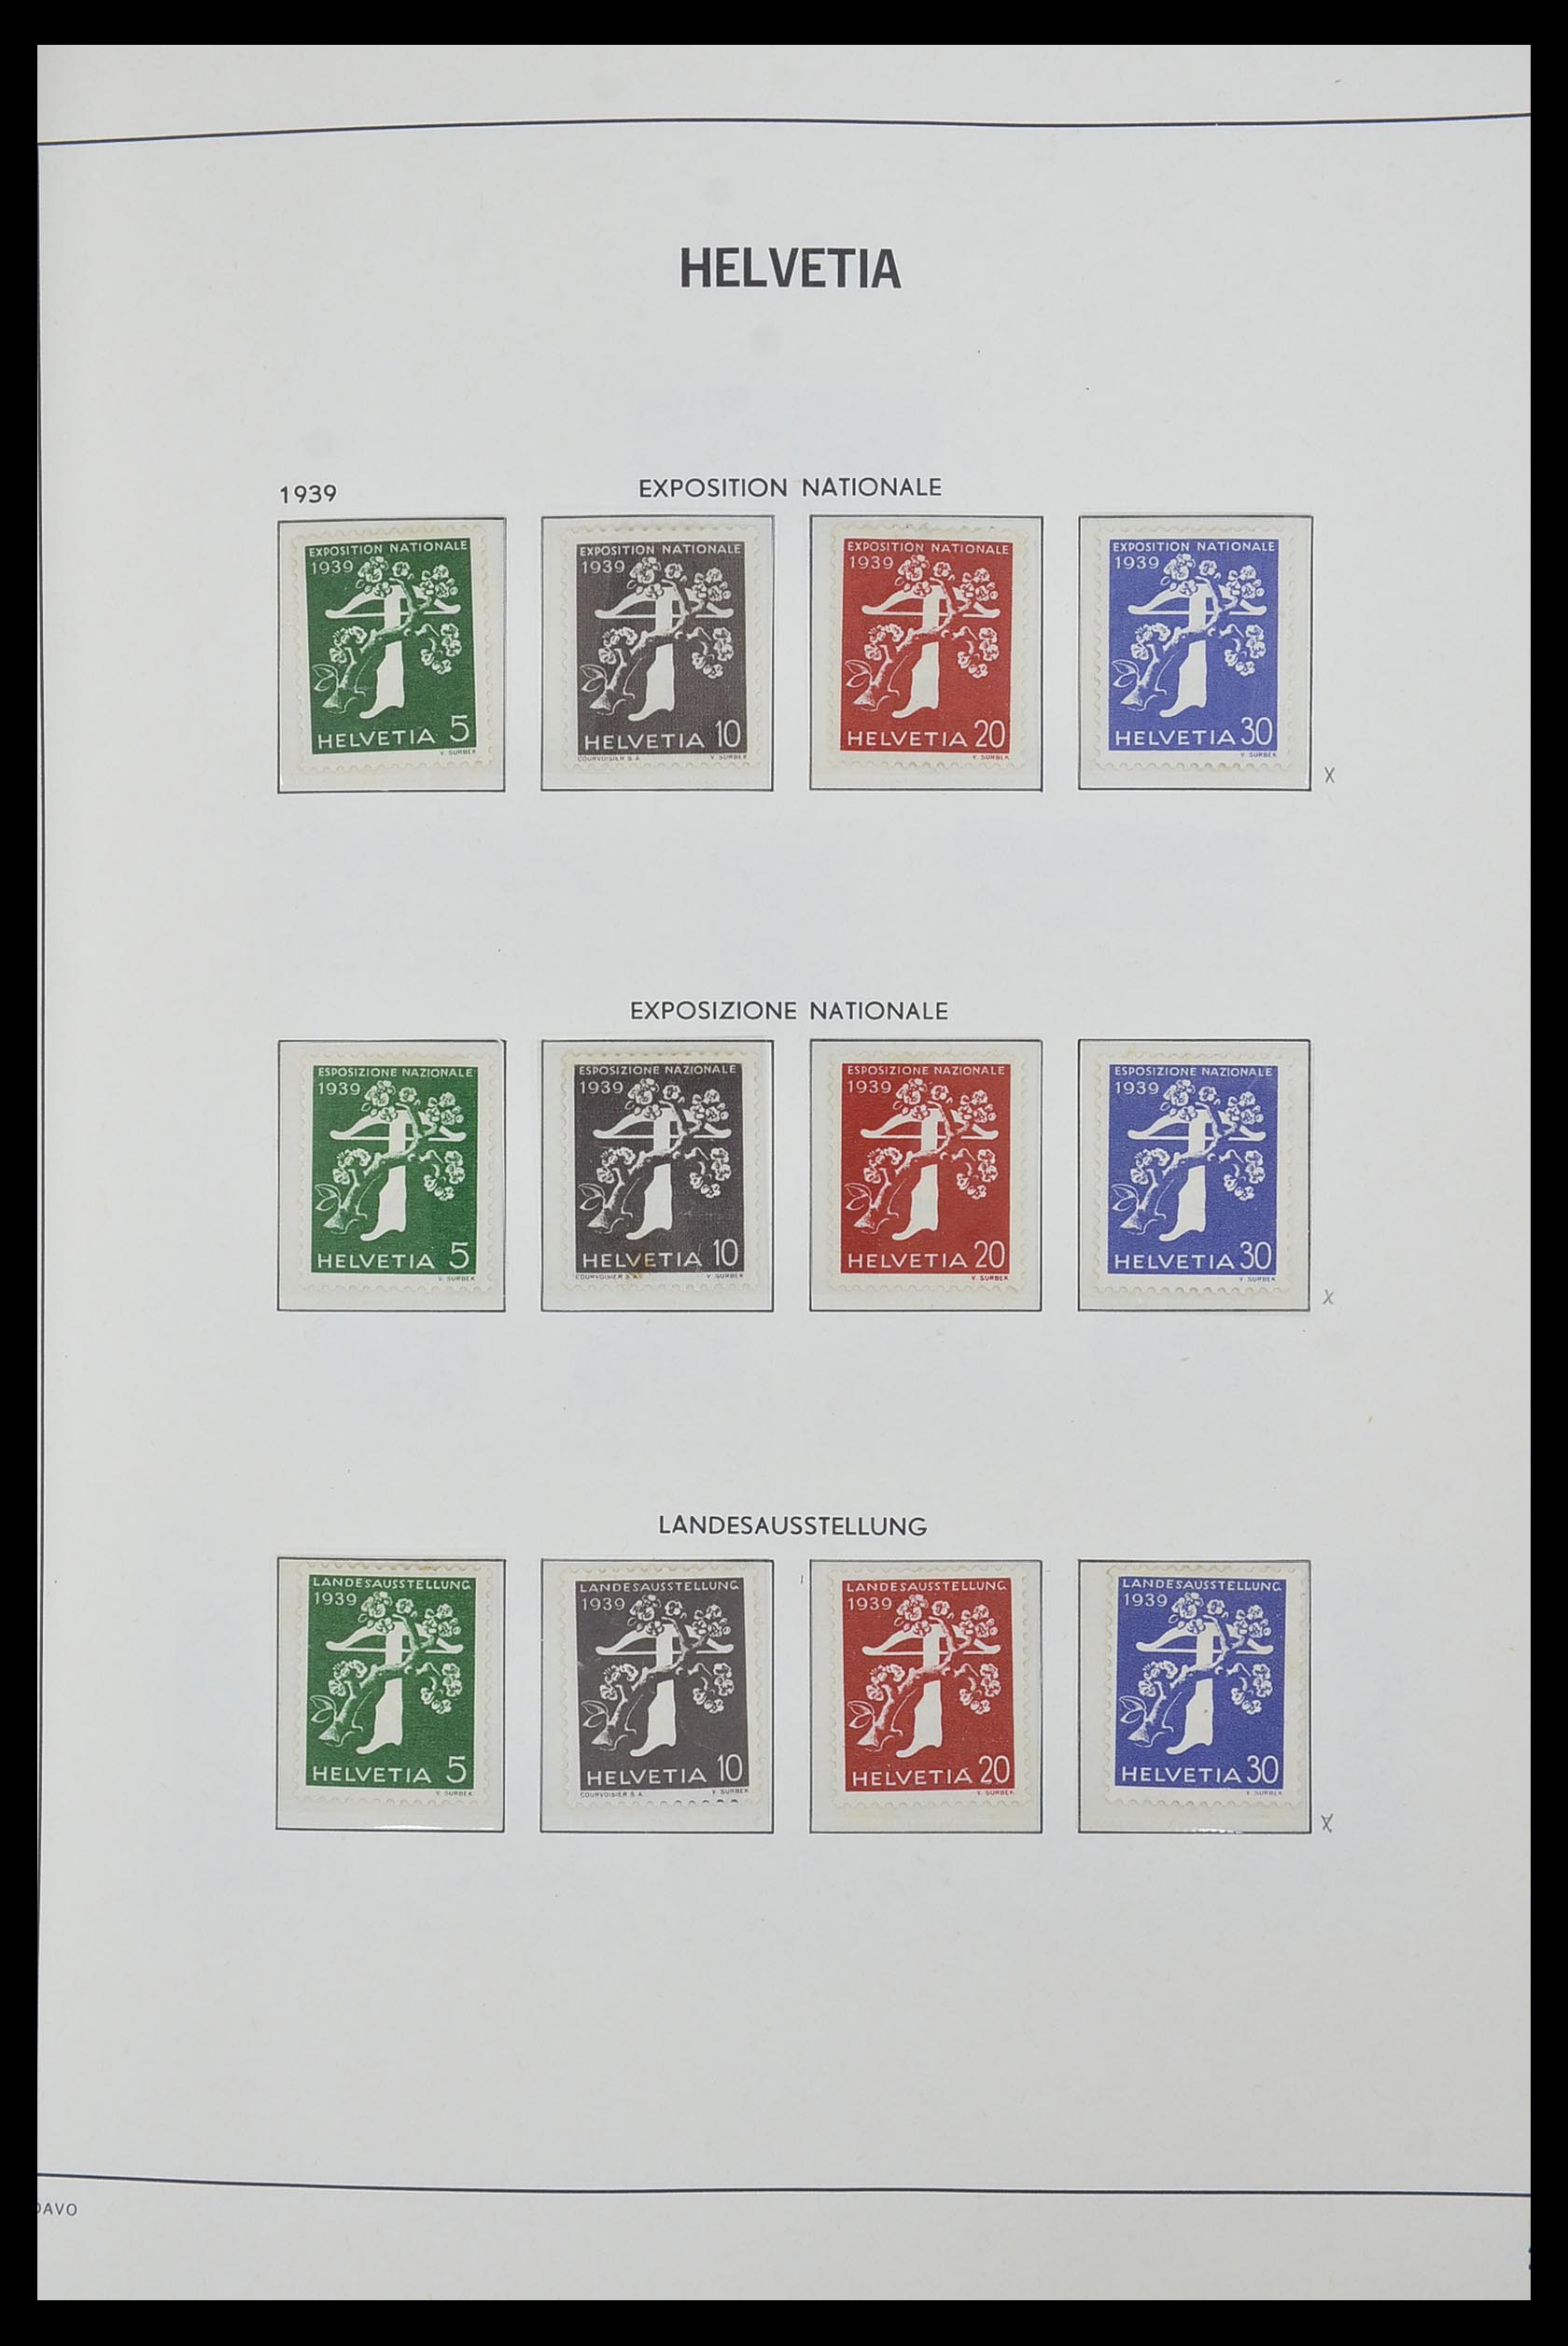 33556 022 - Stamp collection 33556 Switzerland 1862-2000.